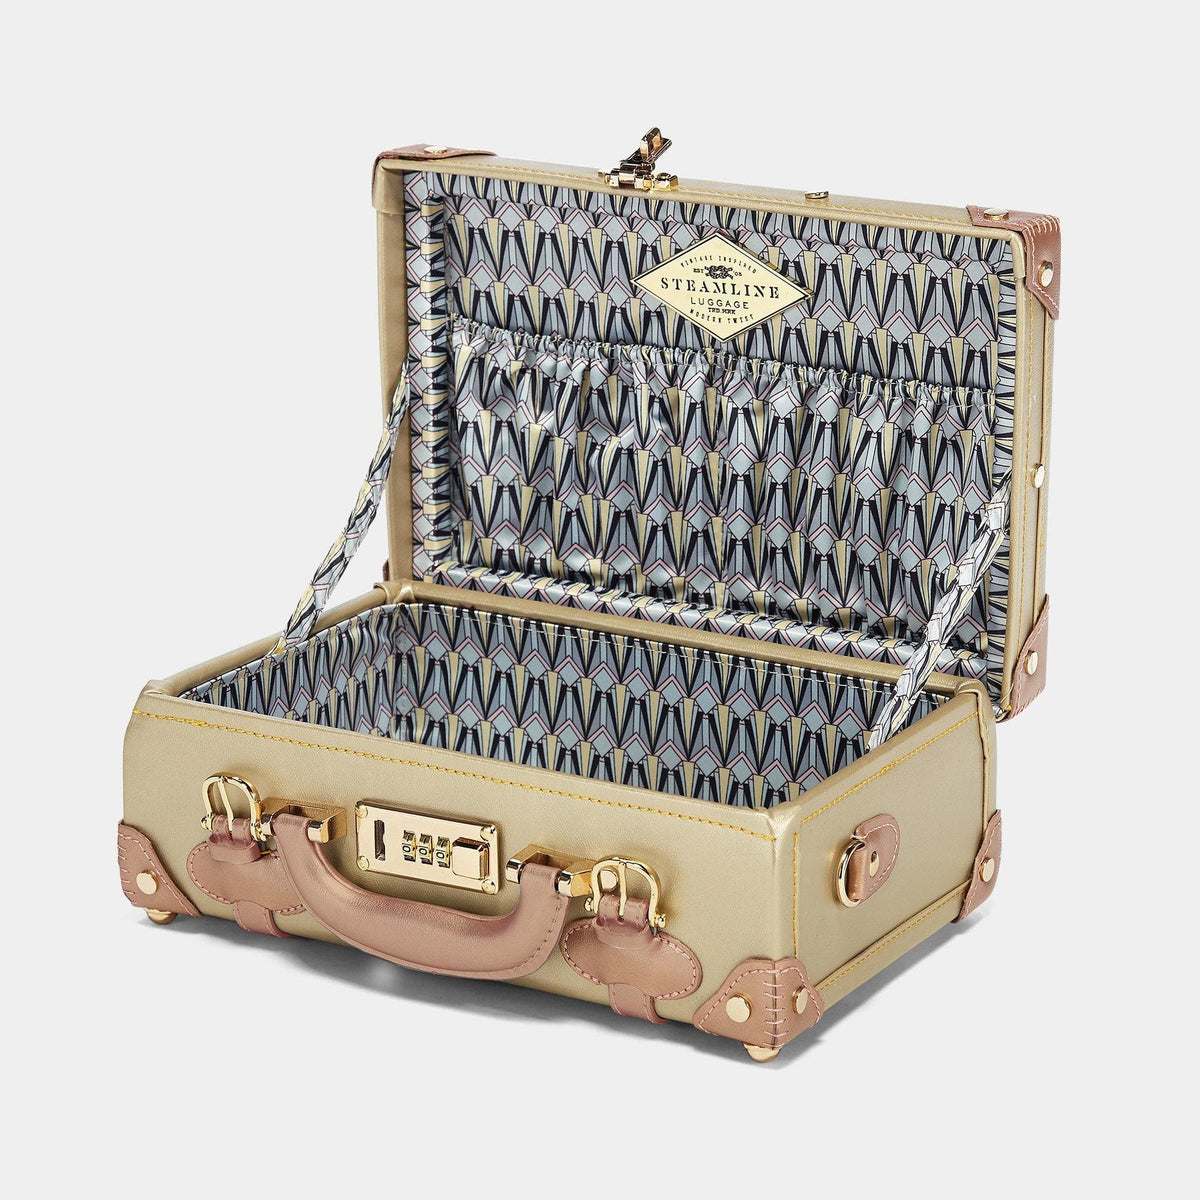 The Alchemist - Vanity Vanity Steamline Luggage 